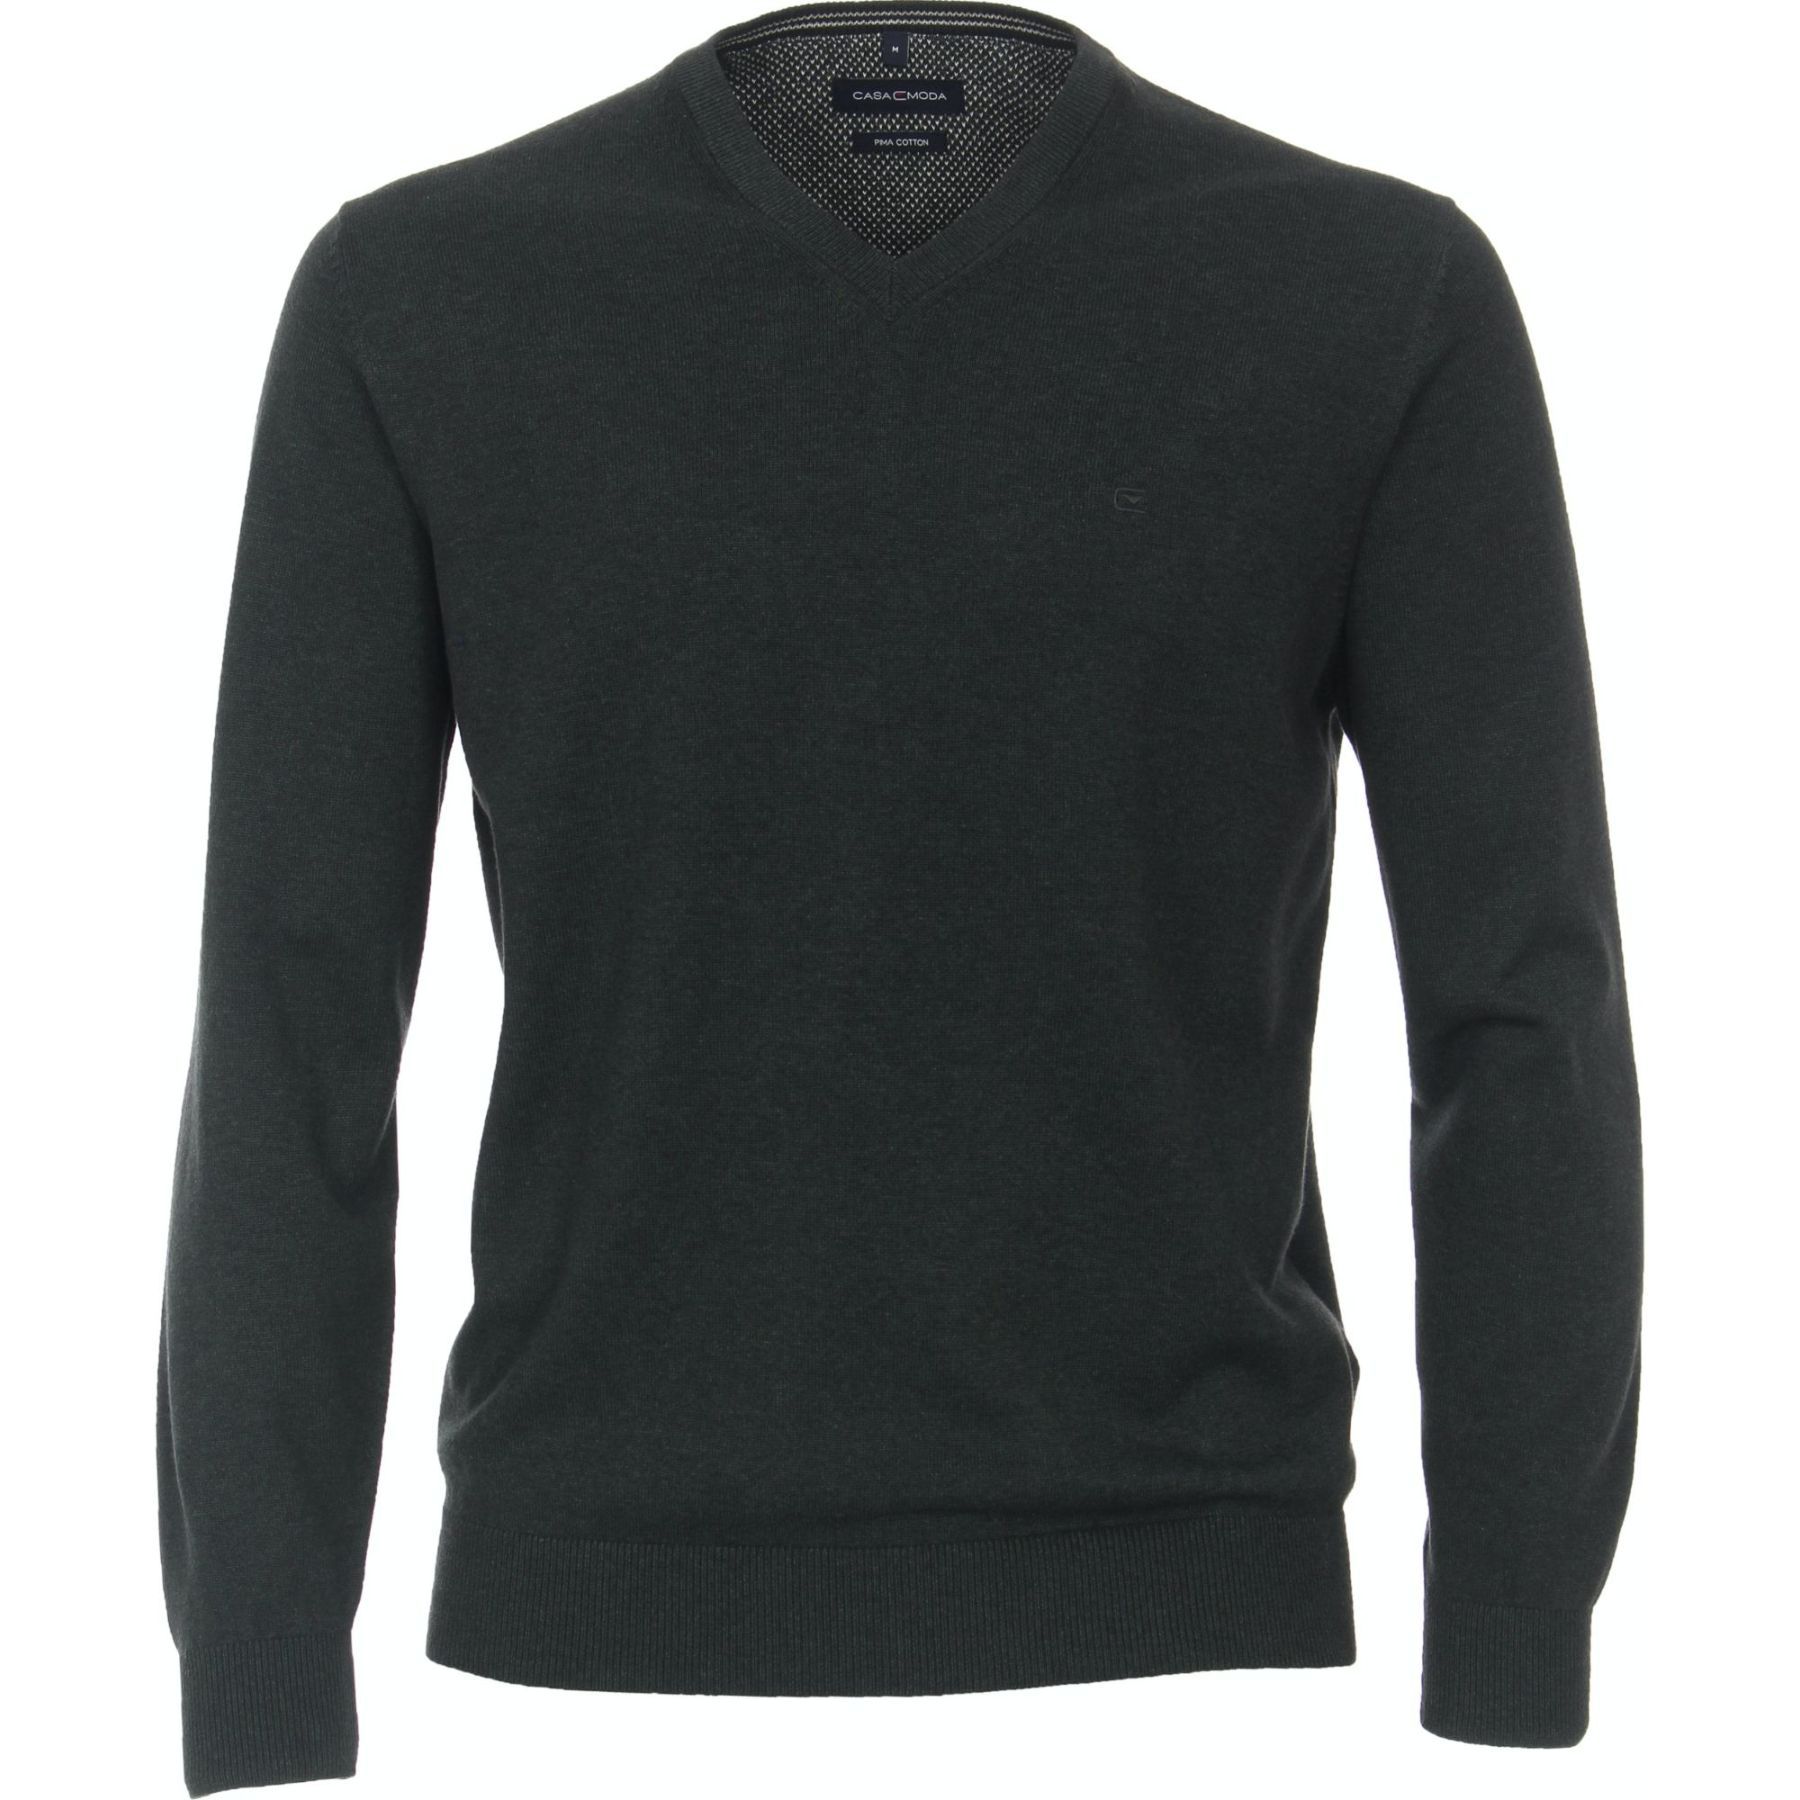 kaufen jetzt & Berger Moda Casa Pullover grün Strickjacken Pullover bei V-Ausschnitt